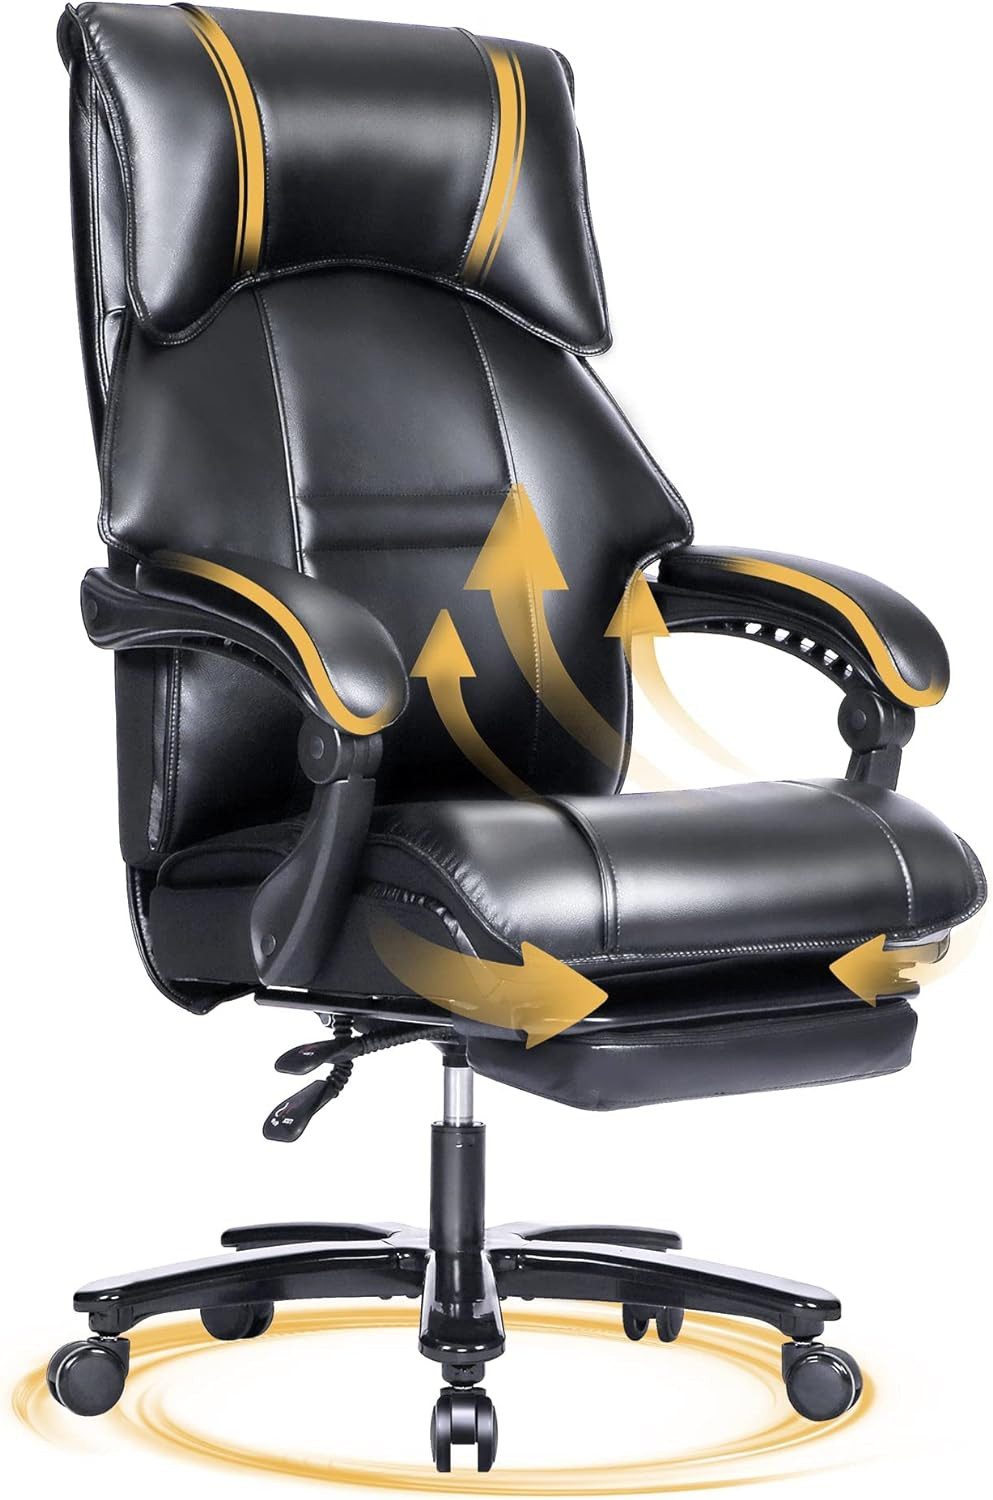 liebtech Gaming Chair Chefsessel aus PU-Leder, hohe Rückenlehne, stabiles Metallgestell (Drehbarer Schreibtischstuhl mit gepolsterten Verbindungsarmlehnen), Bürostuhl 200kg belastbar mit Fußstütze